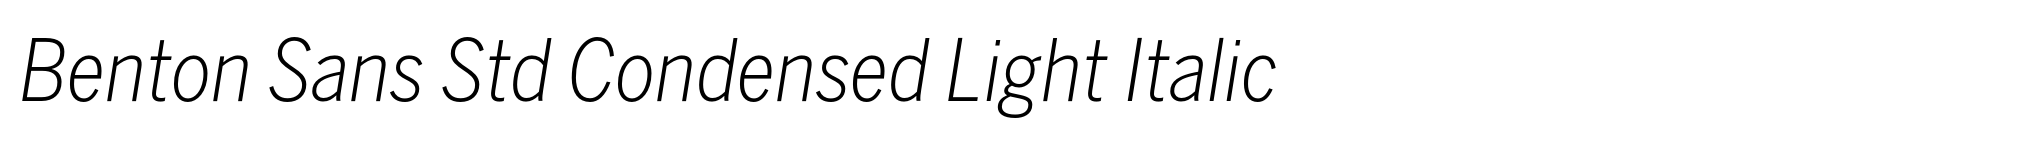 Benton Sans Std Condensed Light Italic image